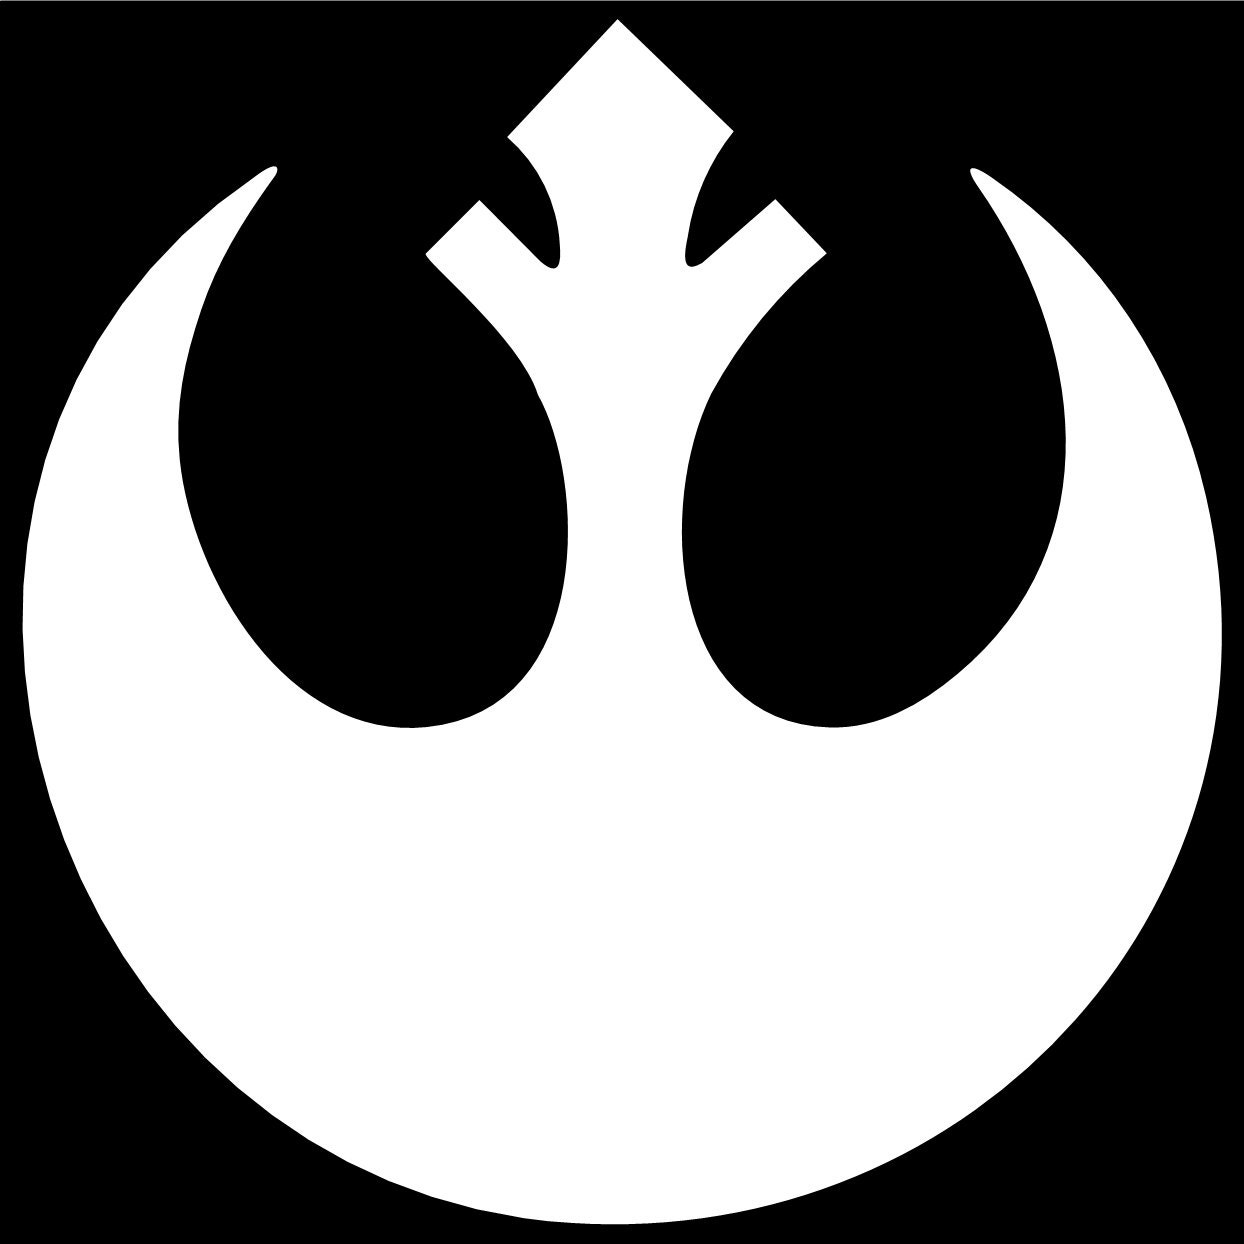 star wars rebellion logo gay flag